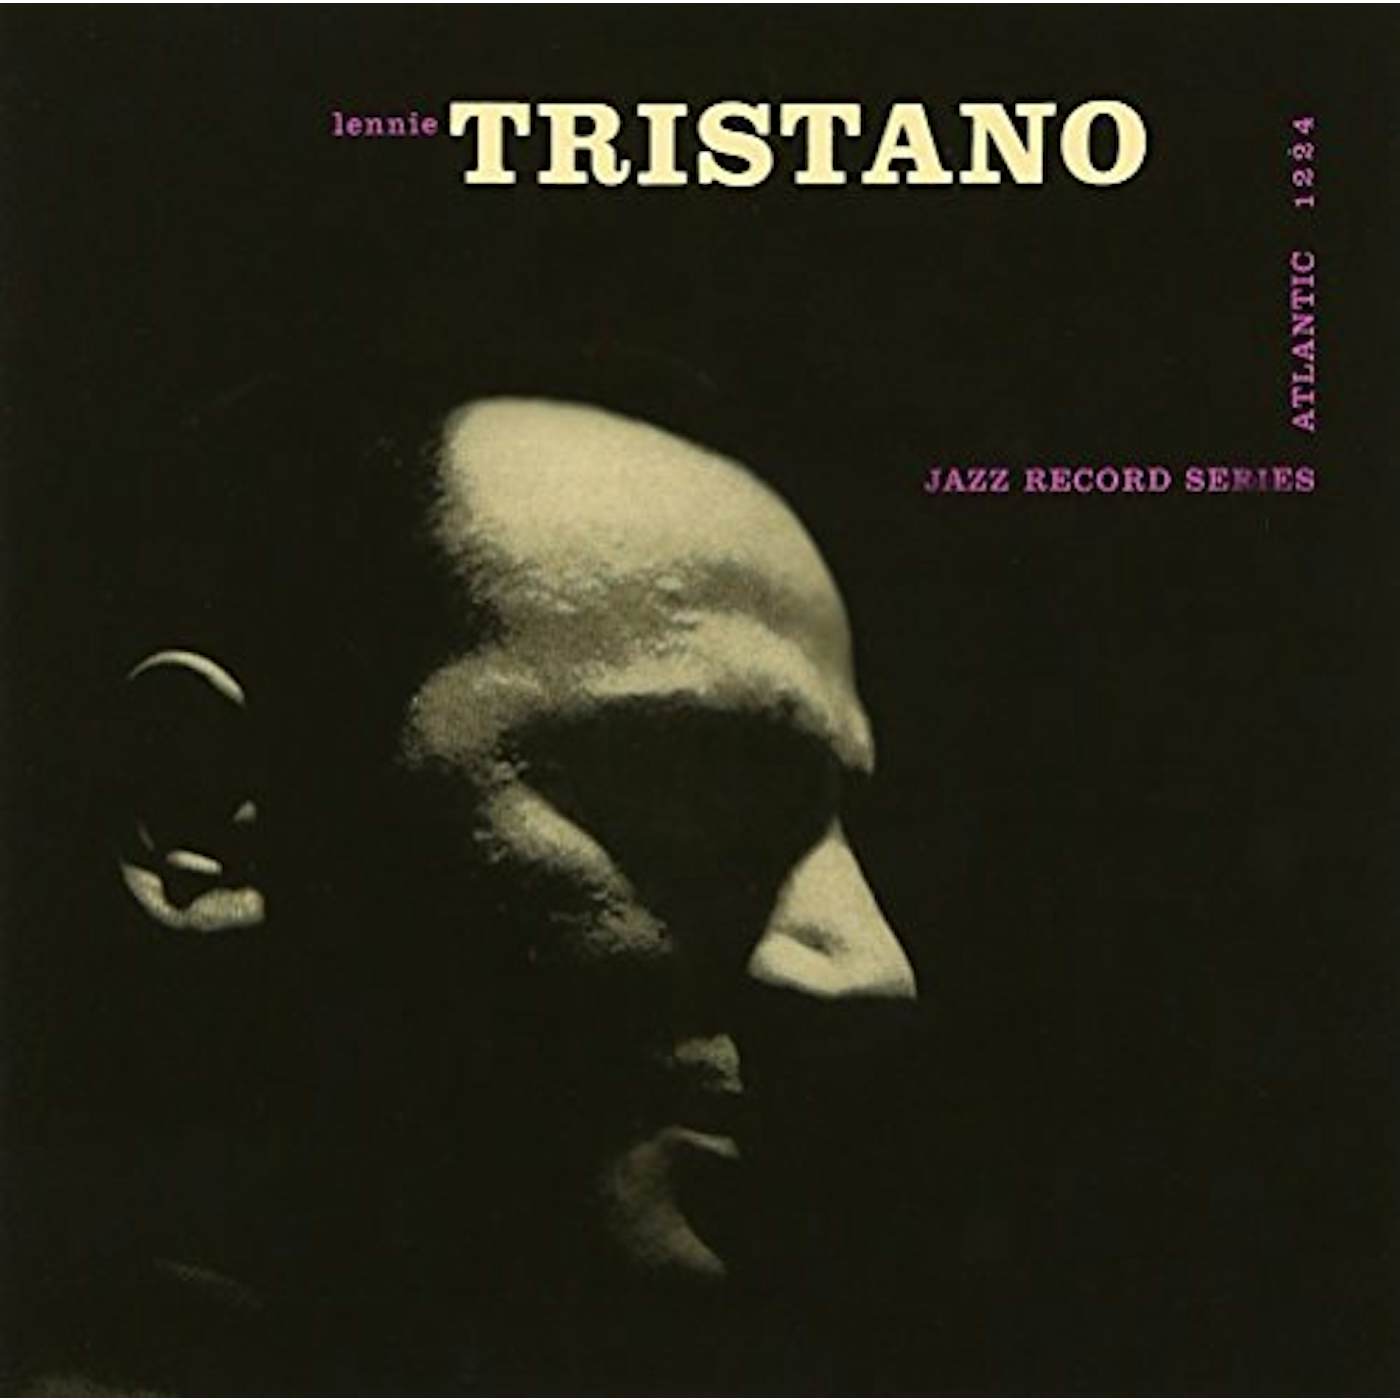 Lennie Tristano TRISTANO CD